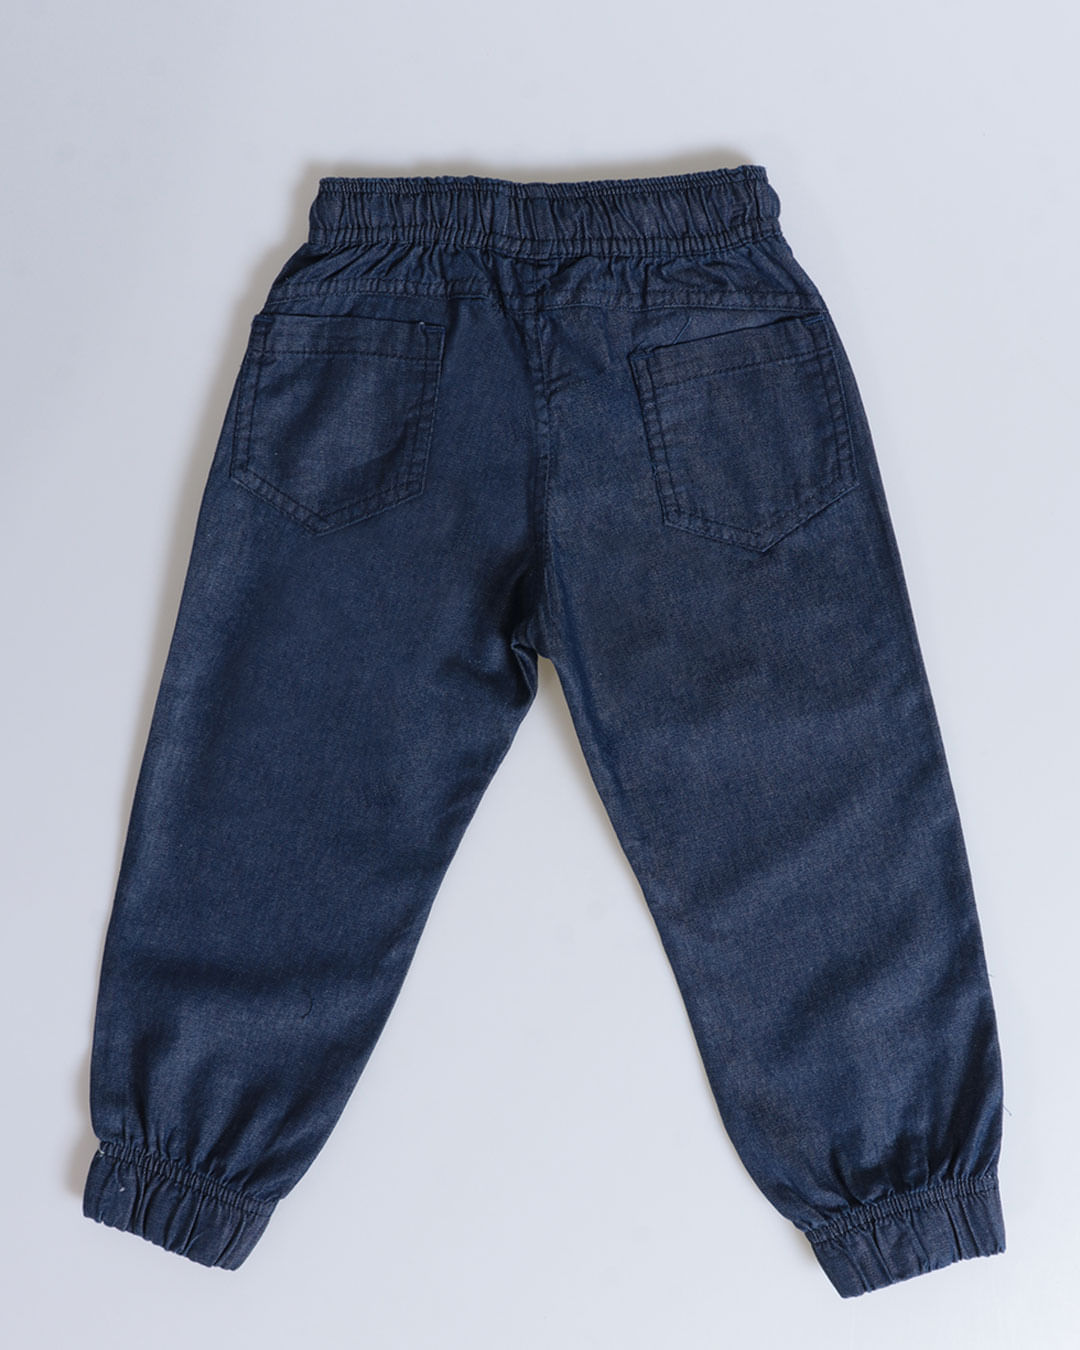 39521000087045-blue-jeans-medio-2